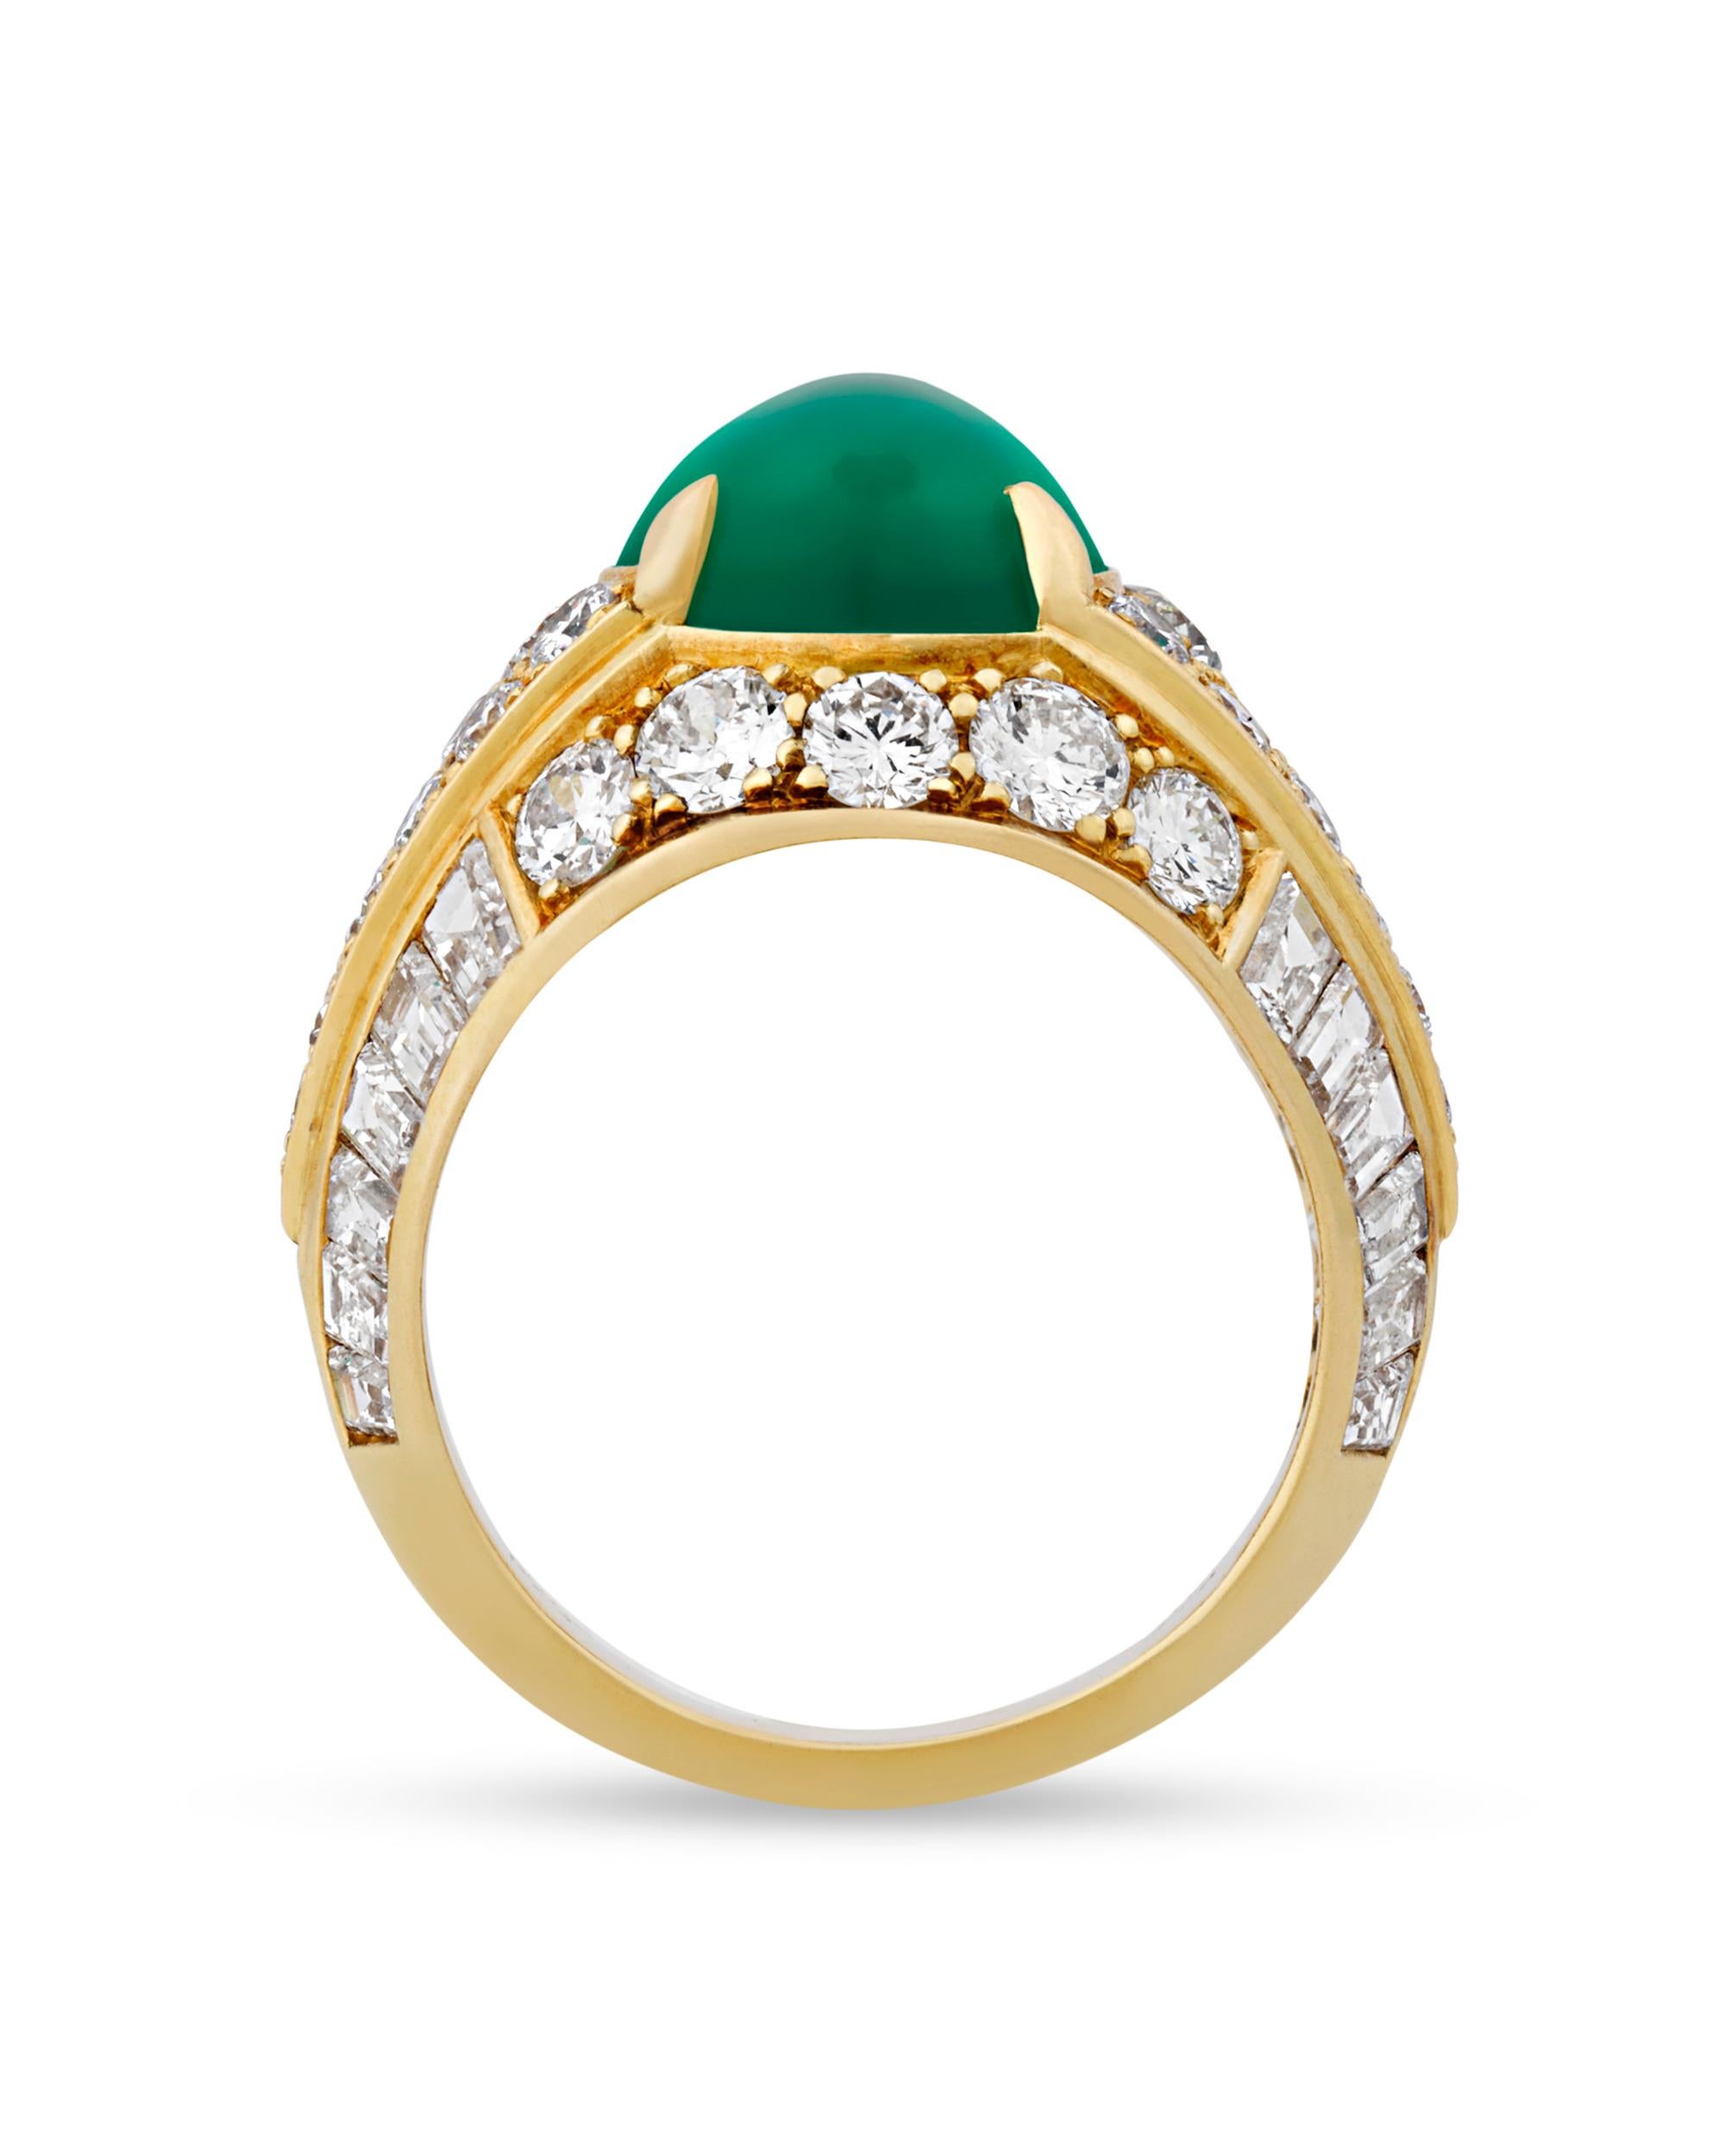 duchess of windsor emerald ring